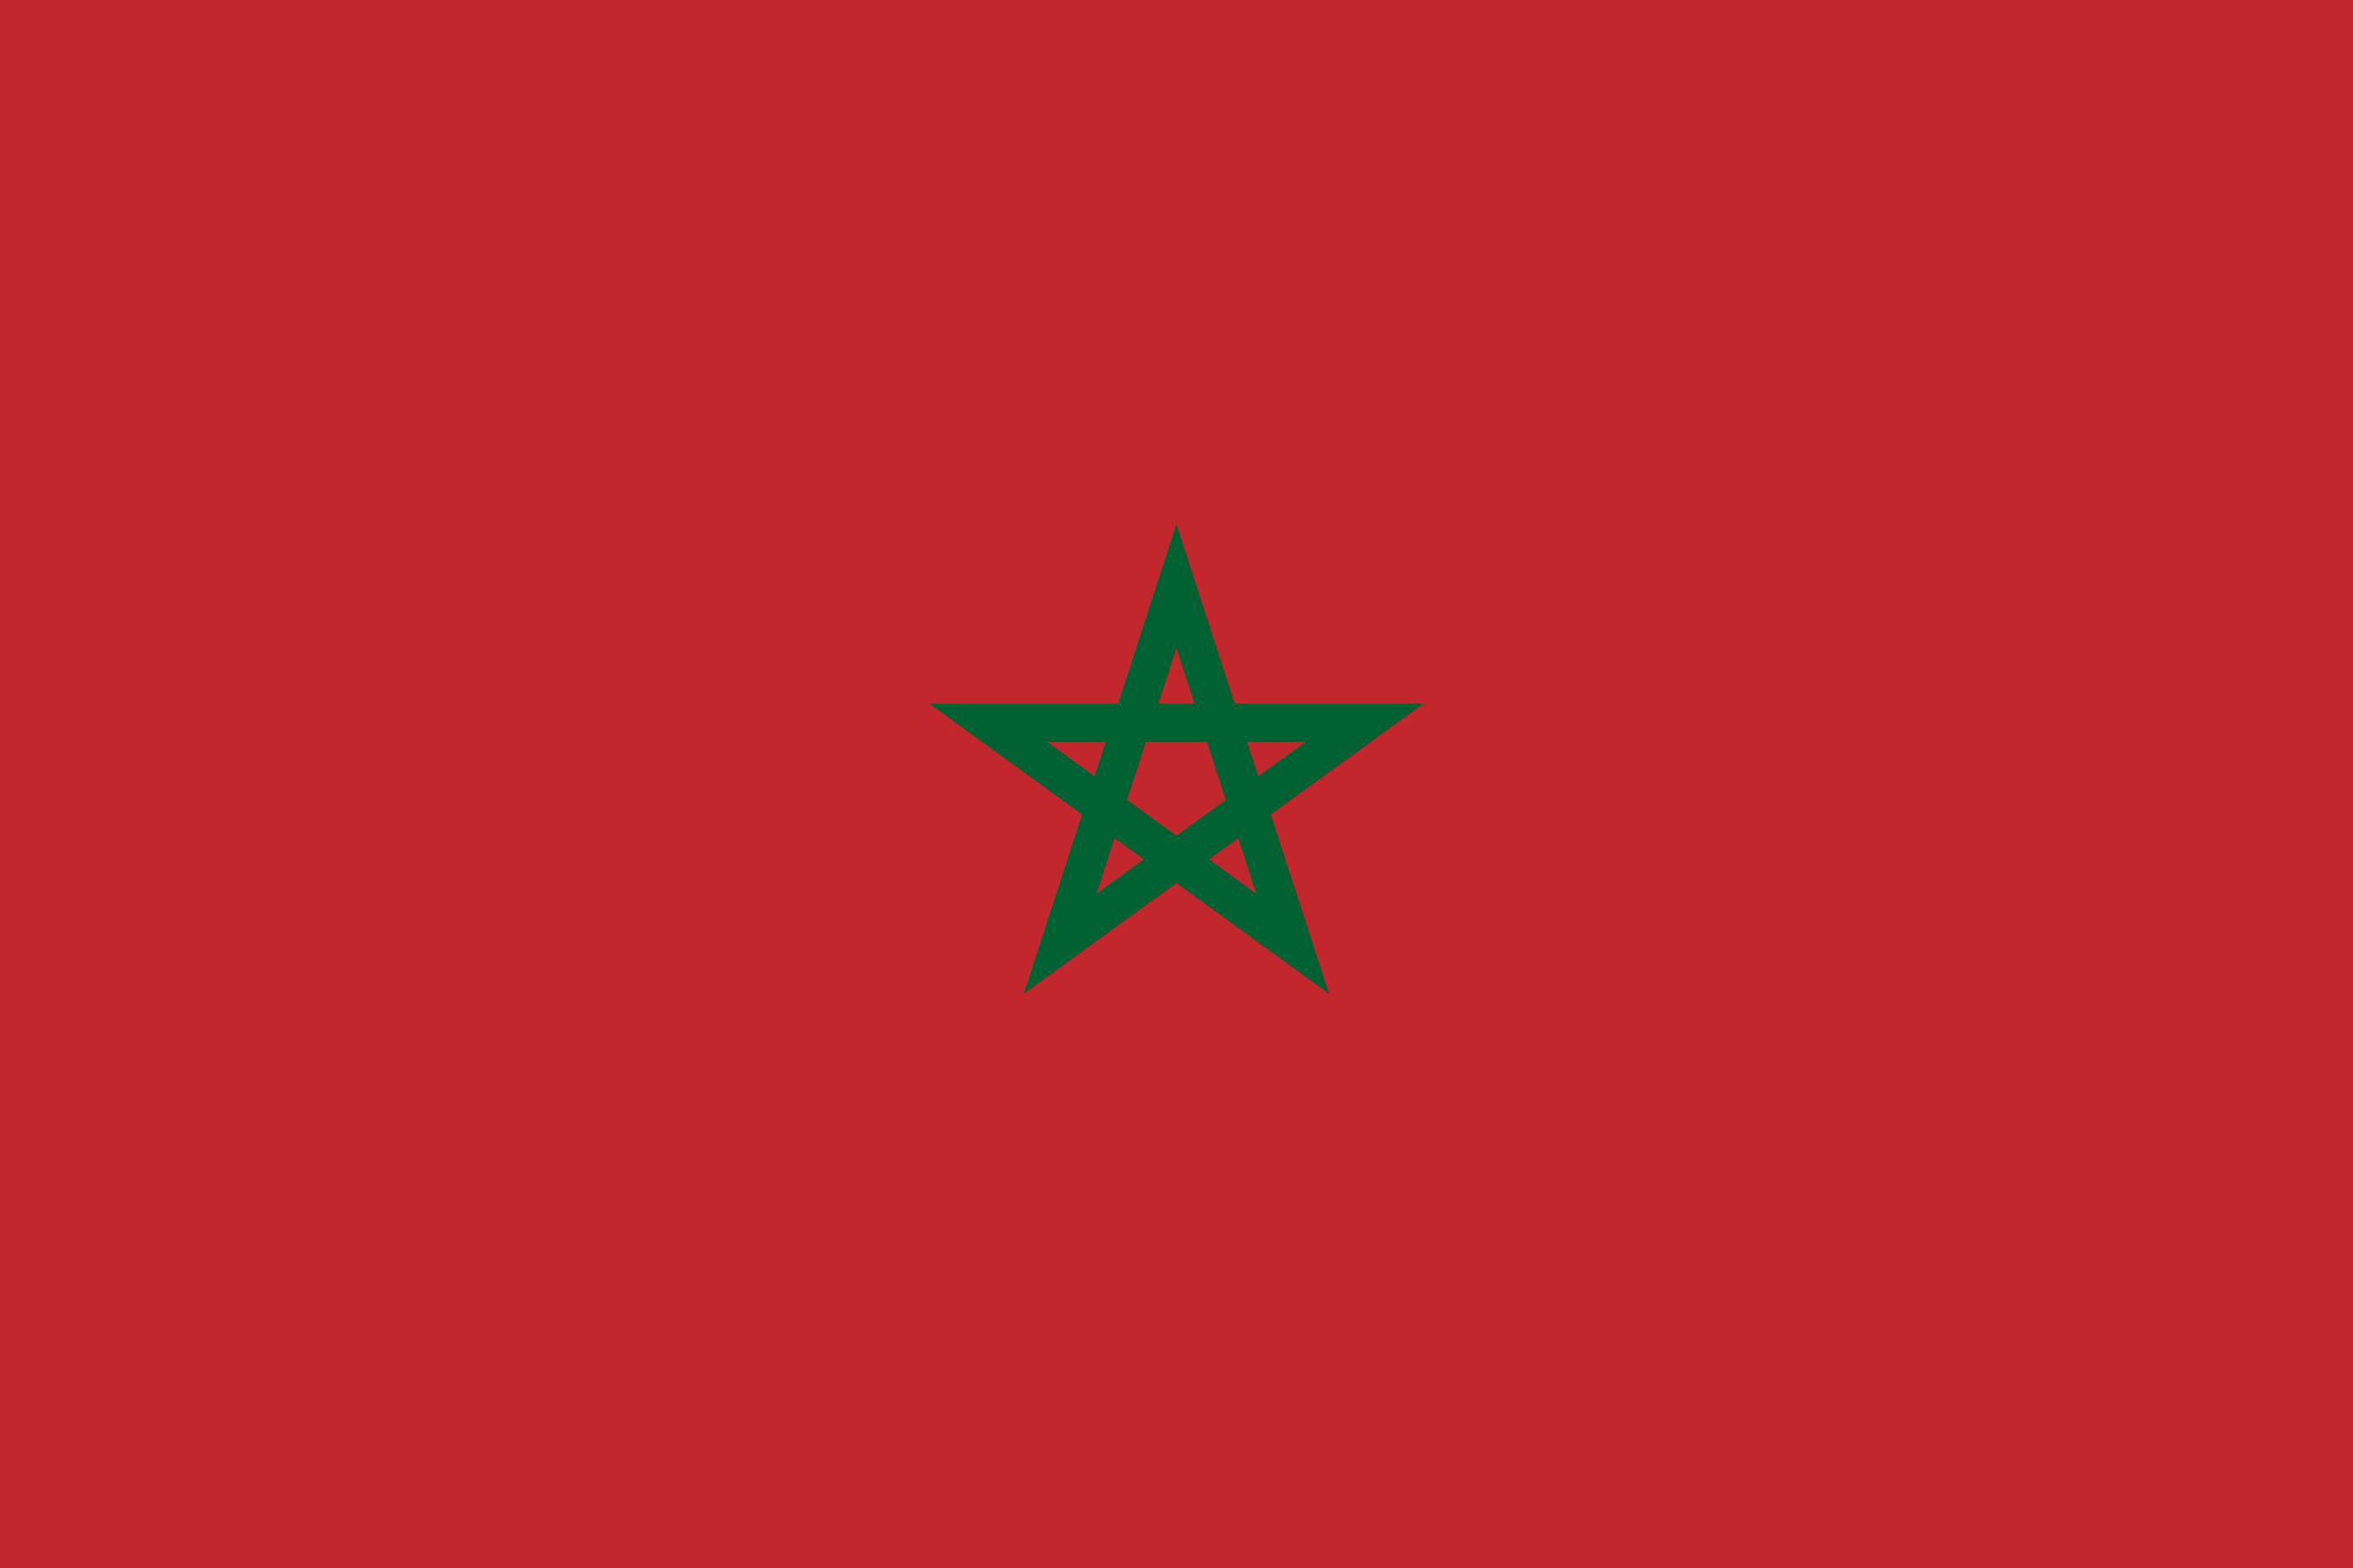 Free Morocco Flag Documents: PDF, DOC, DOCX, HTML & More!